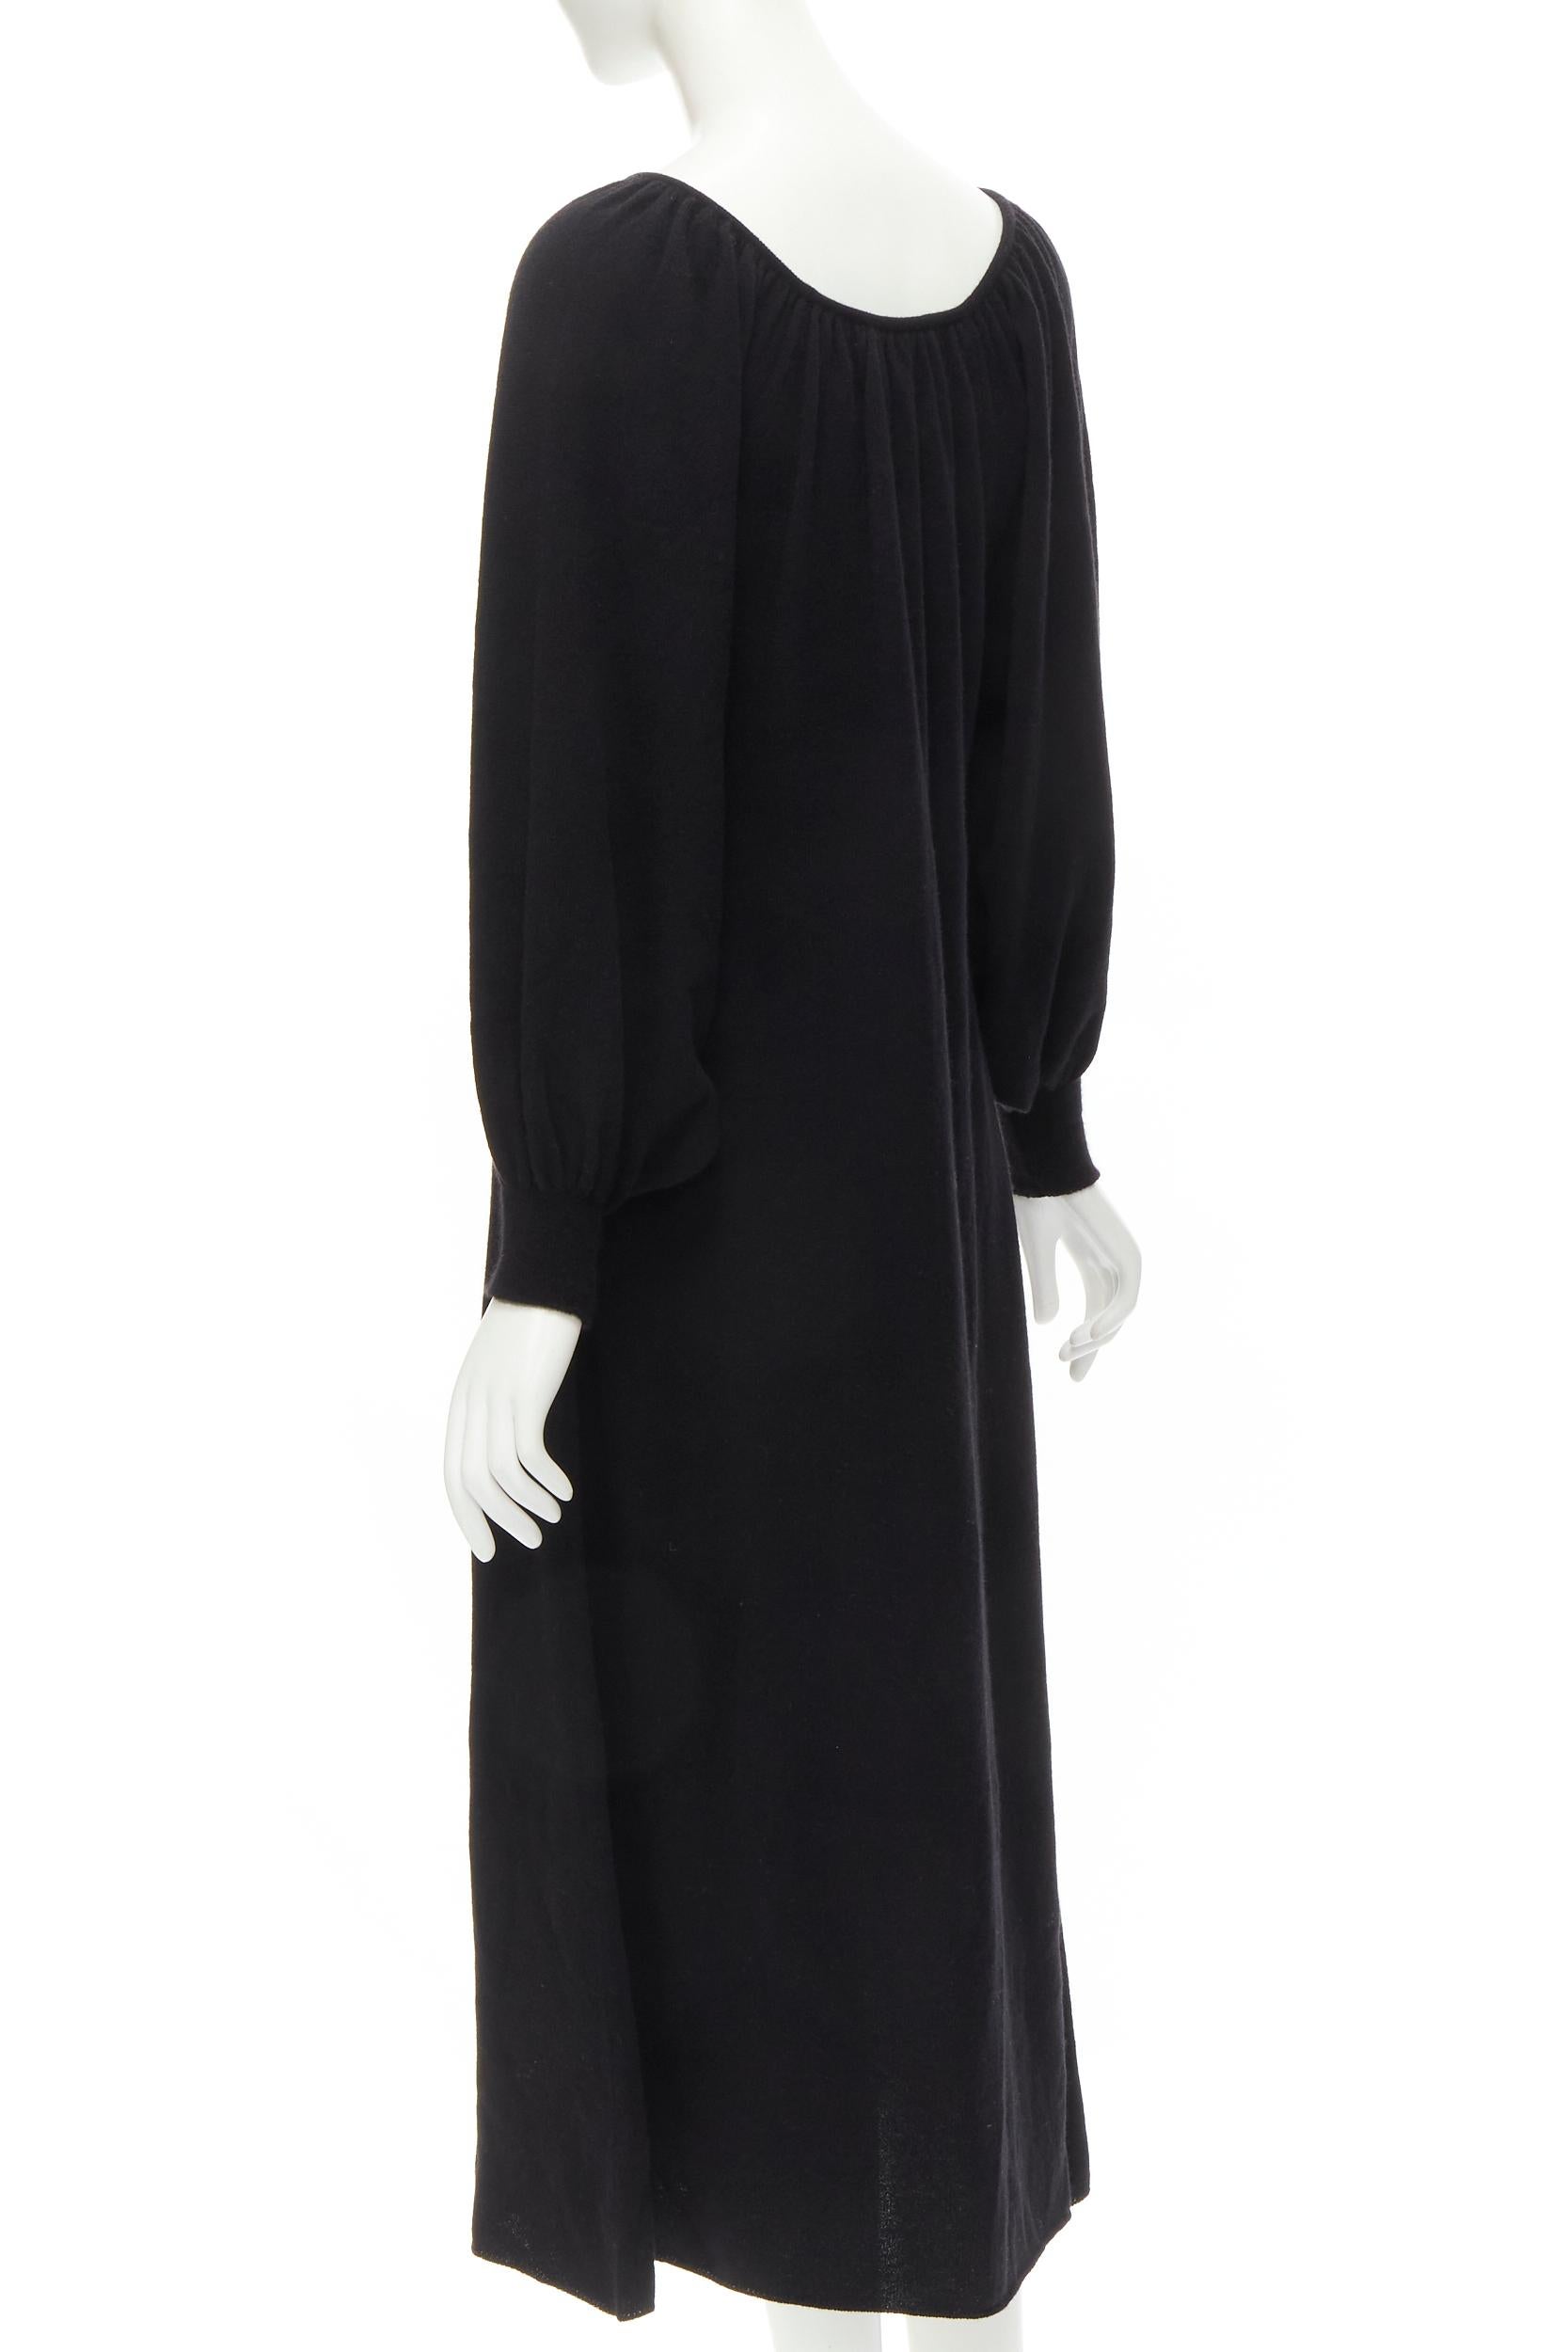 Women's RYAN ROCHE 100% cashmere black pleated collar bubble sleeve midi dress S For Sale